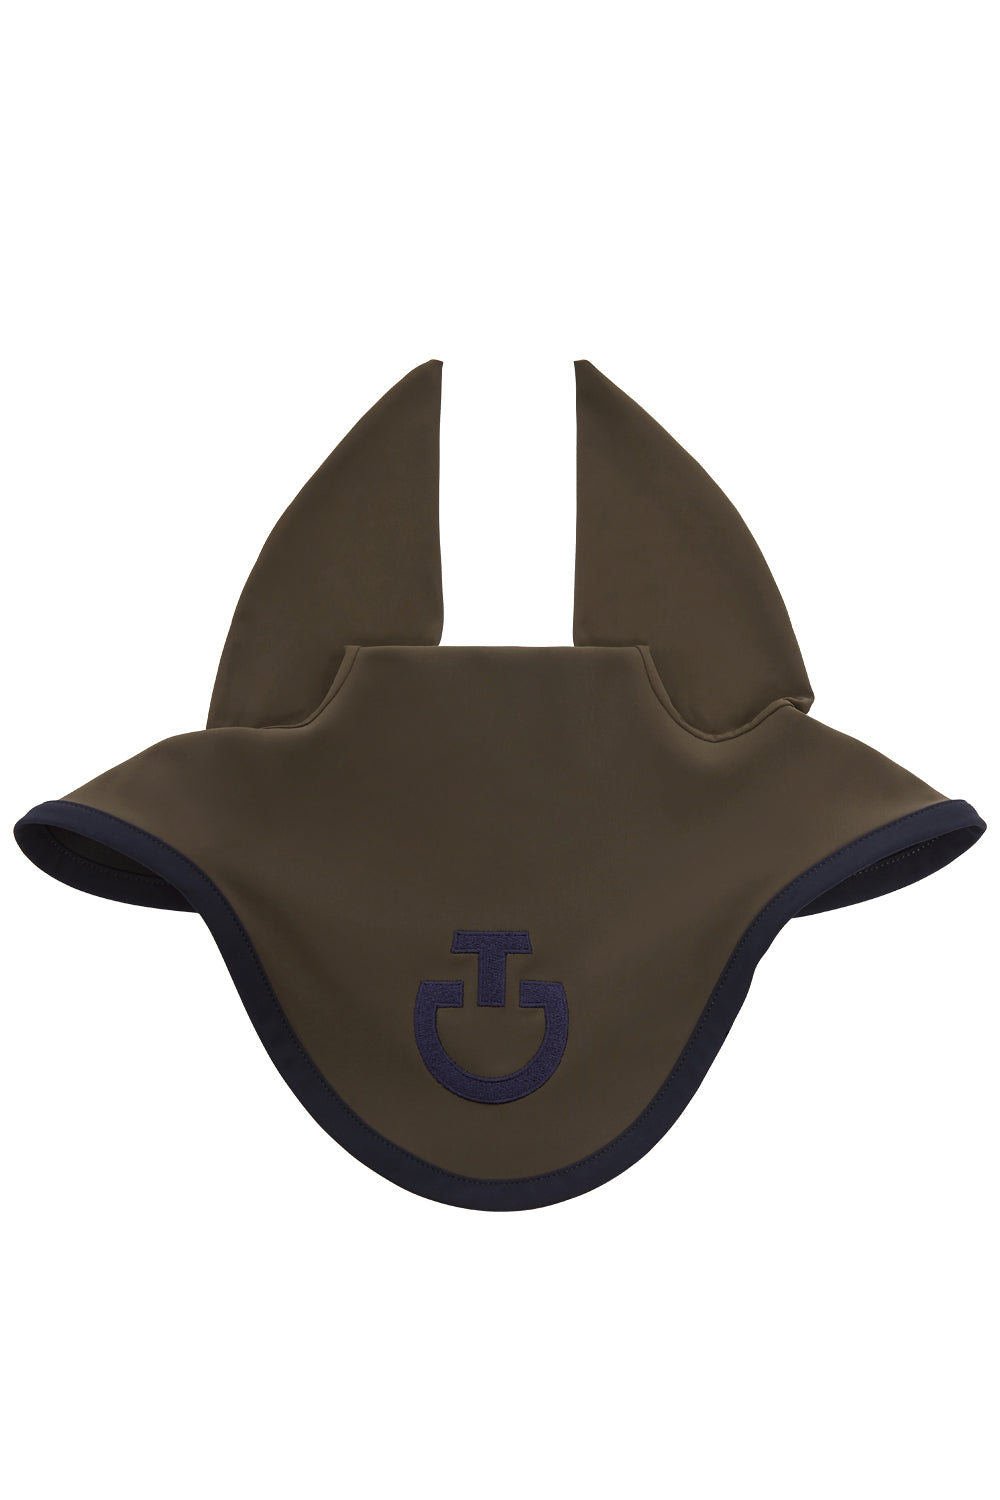 Cavalleria Toscana Navy and Khaki Jersey Ear net